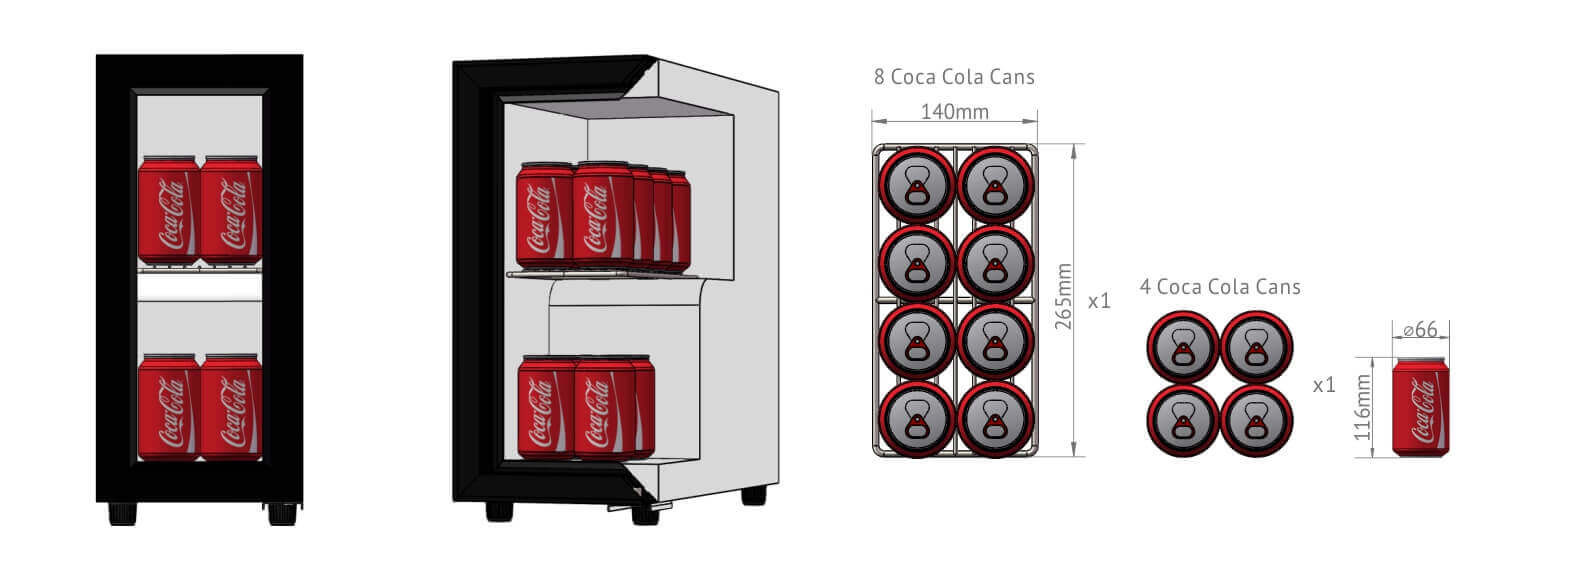 Procool Mini Fridge T-12 Pack-out_Coca Cola 330ml Cans